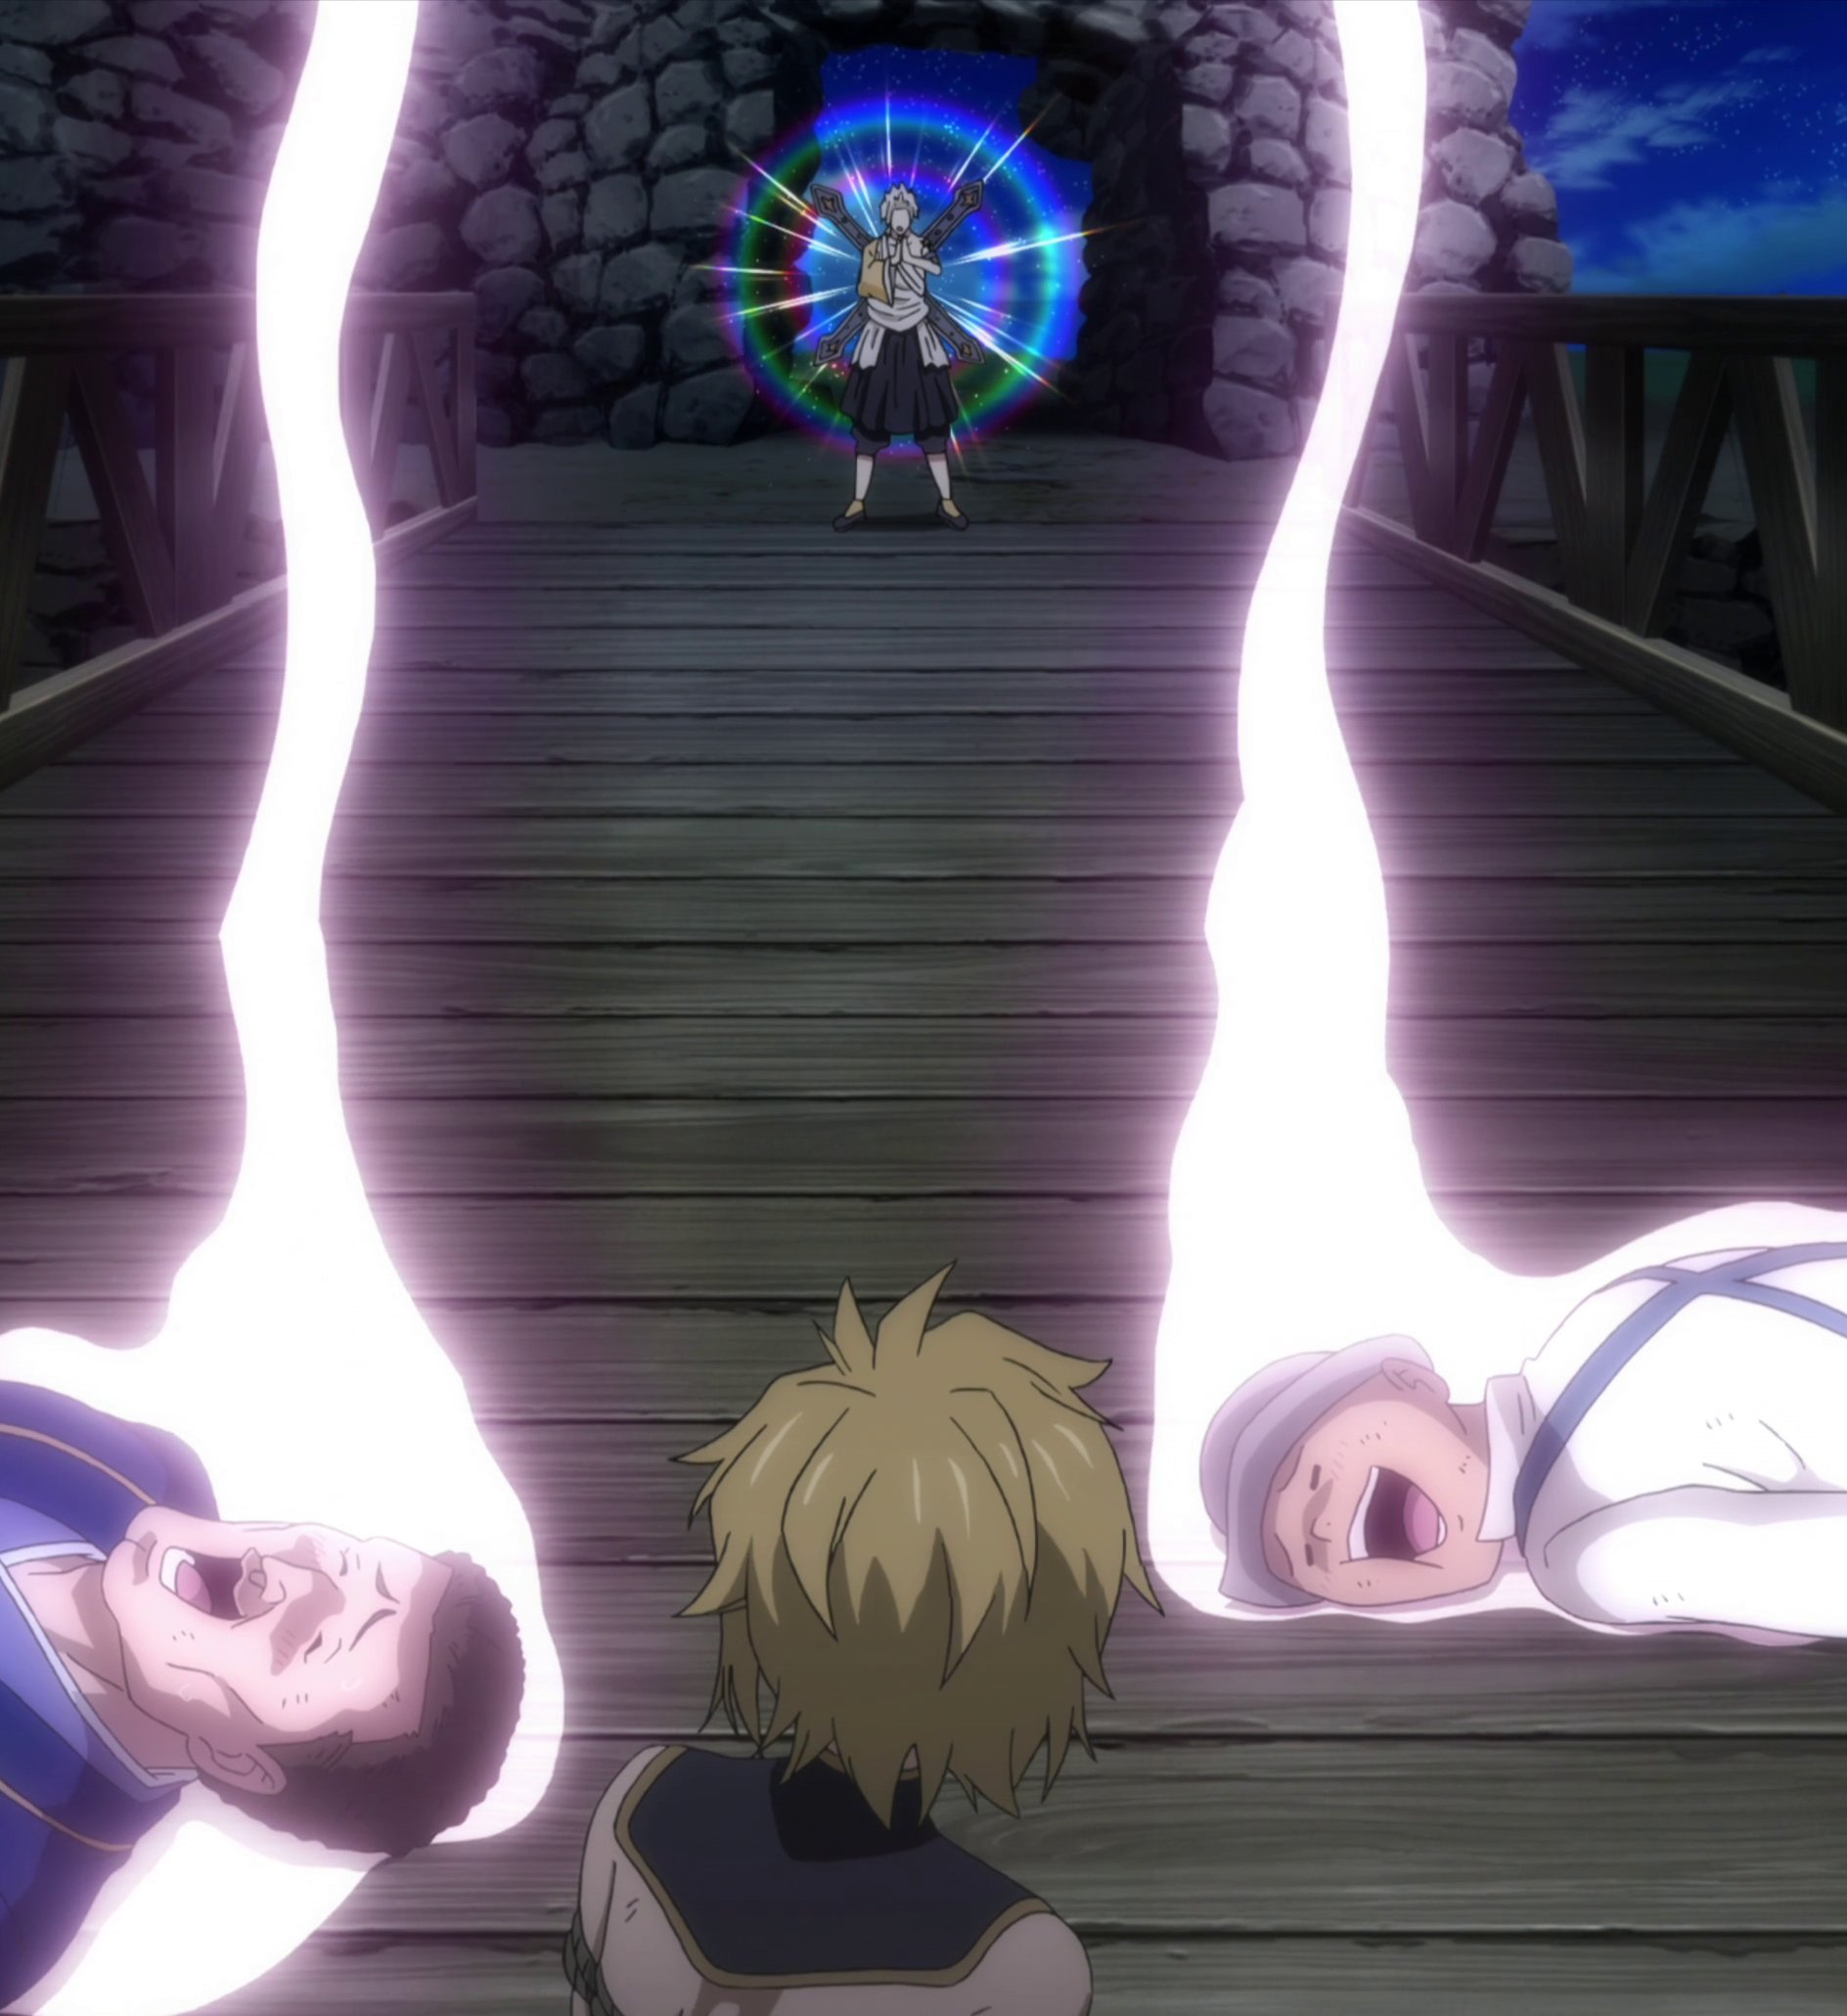 Episode 305 - Fairy Tail: Final Season - Anime News Network